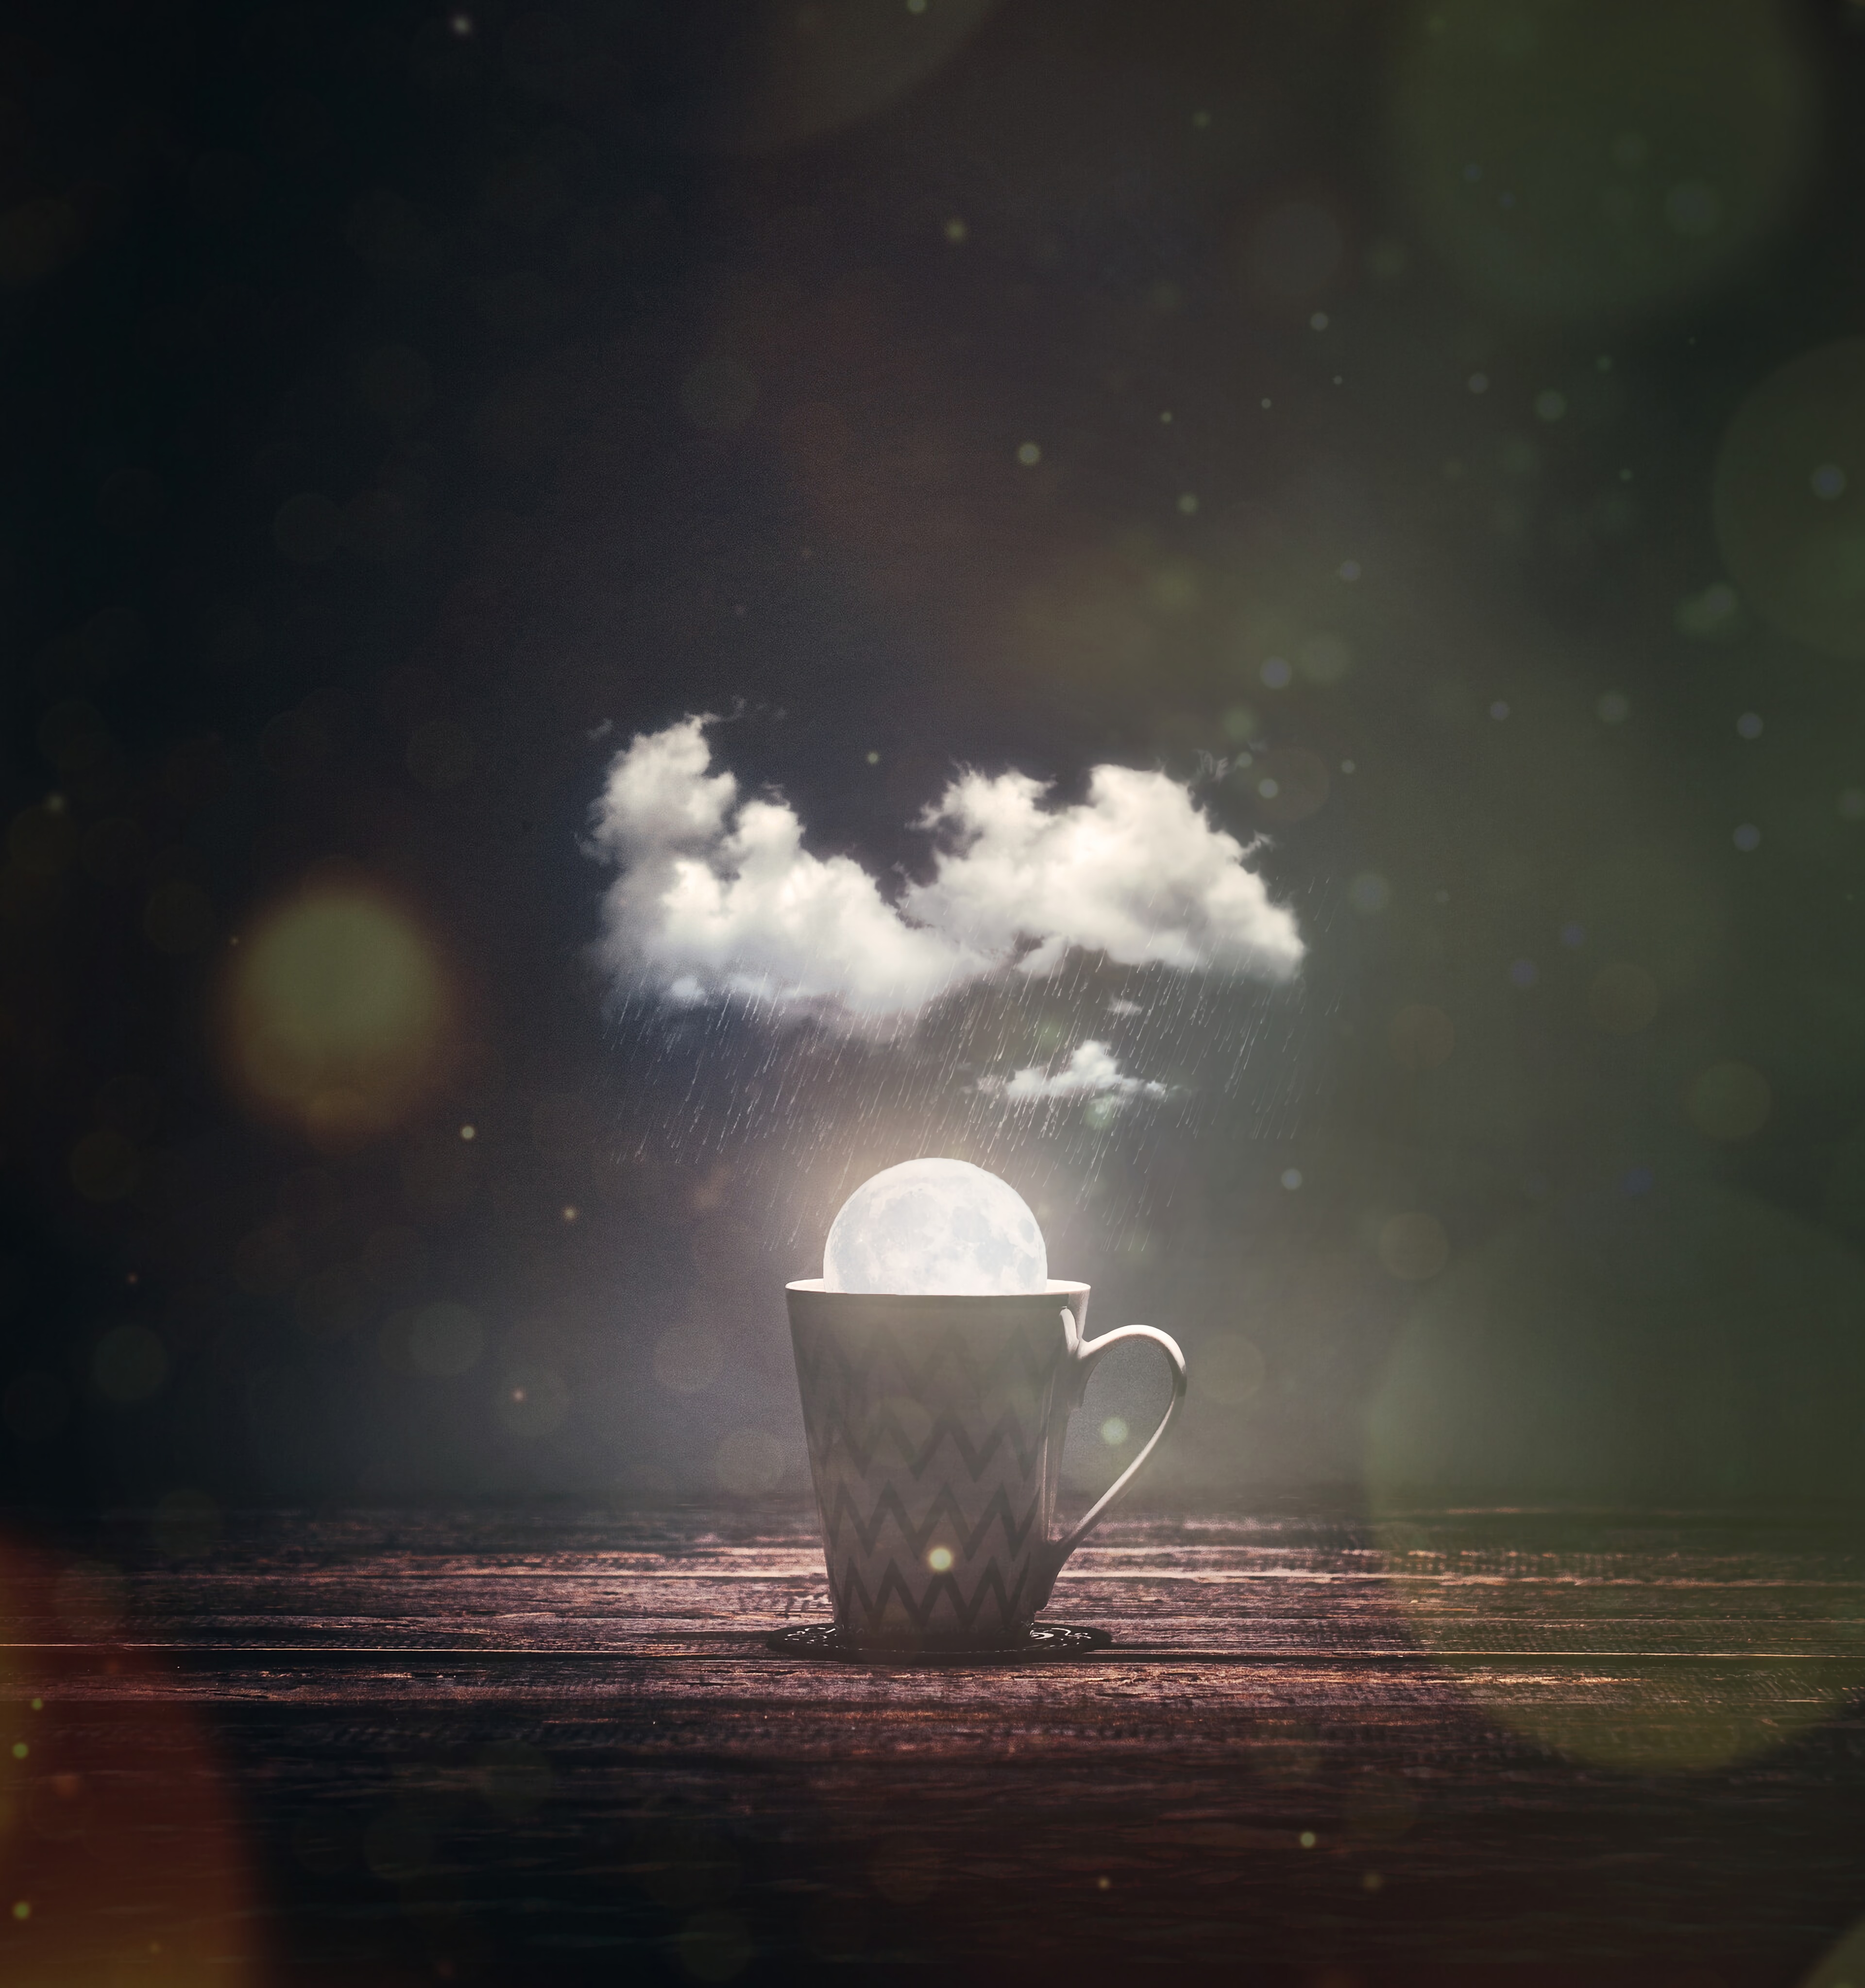 glare, rain, photoshop, moon, miscellanea, miscellaneous, cup, cloud, mug wallpaper for mobile